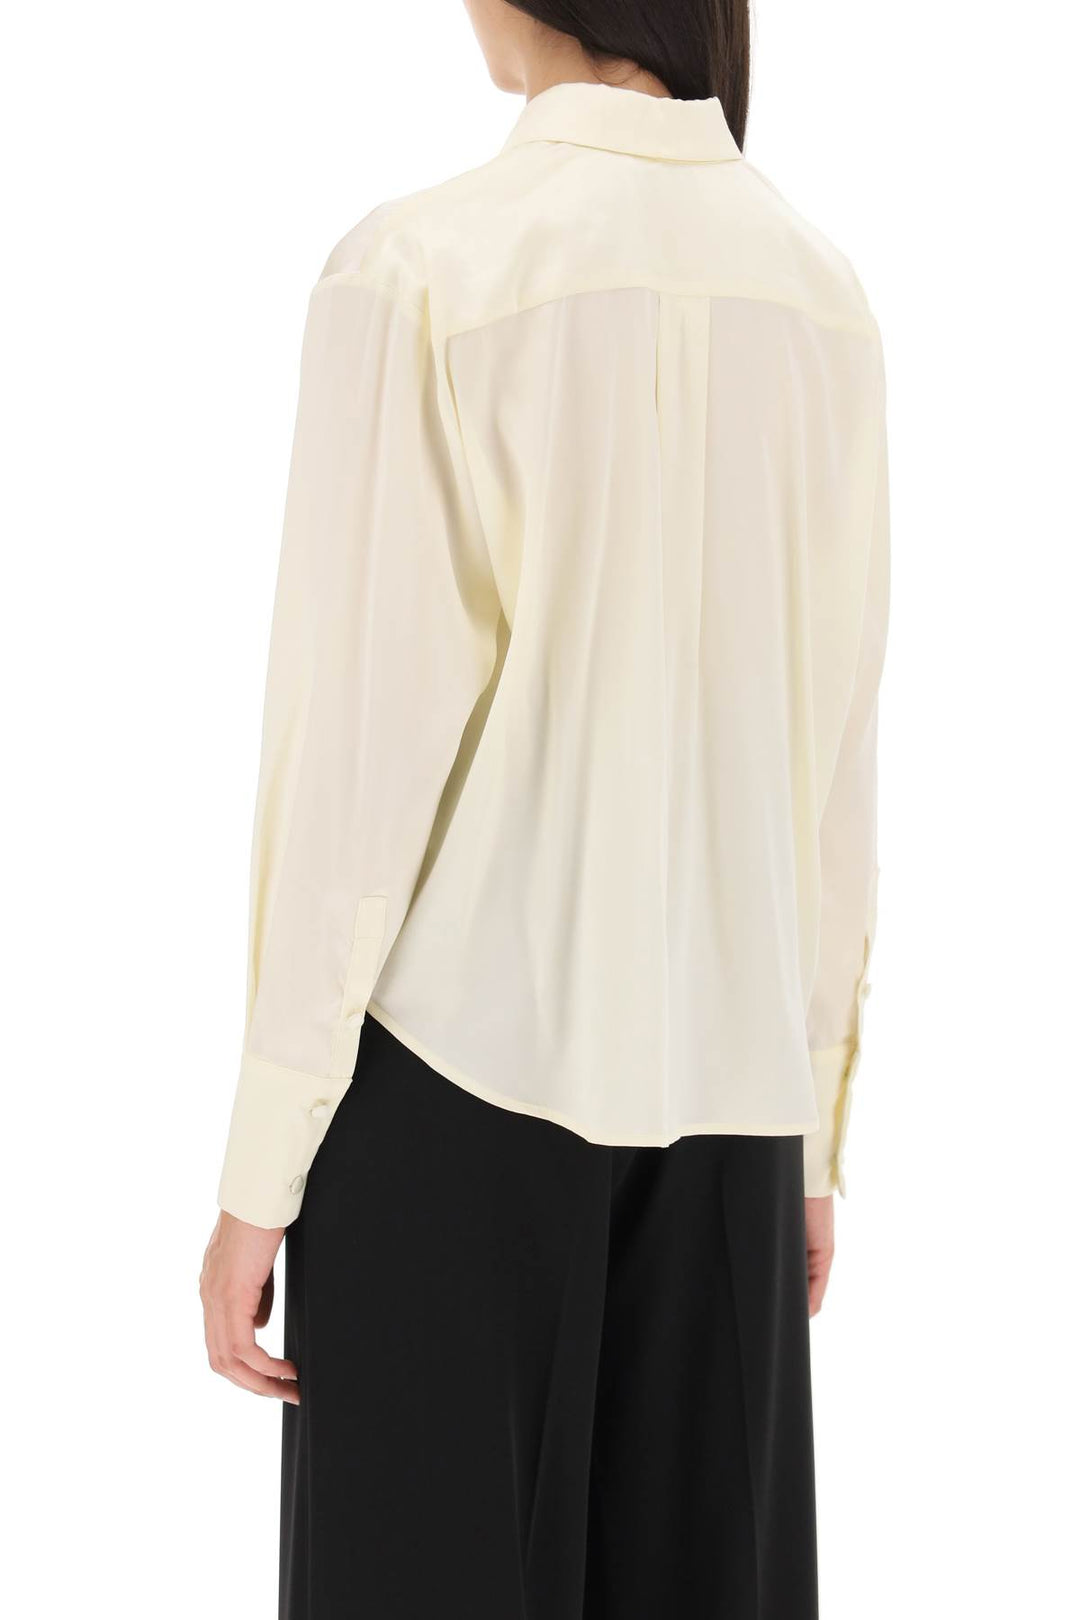 Mvp Wardrobe 'Sunset Boulevard' Satin Shirt   Bianco